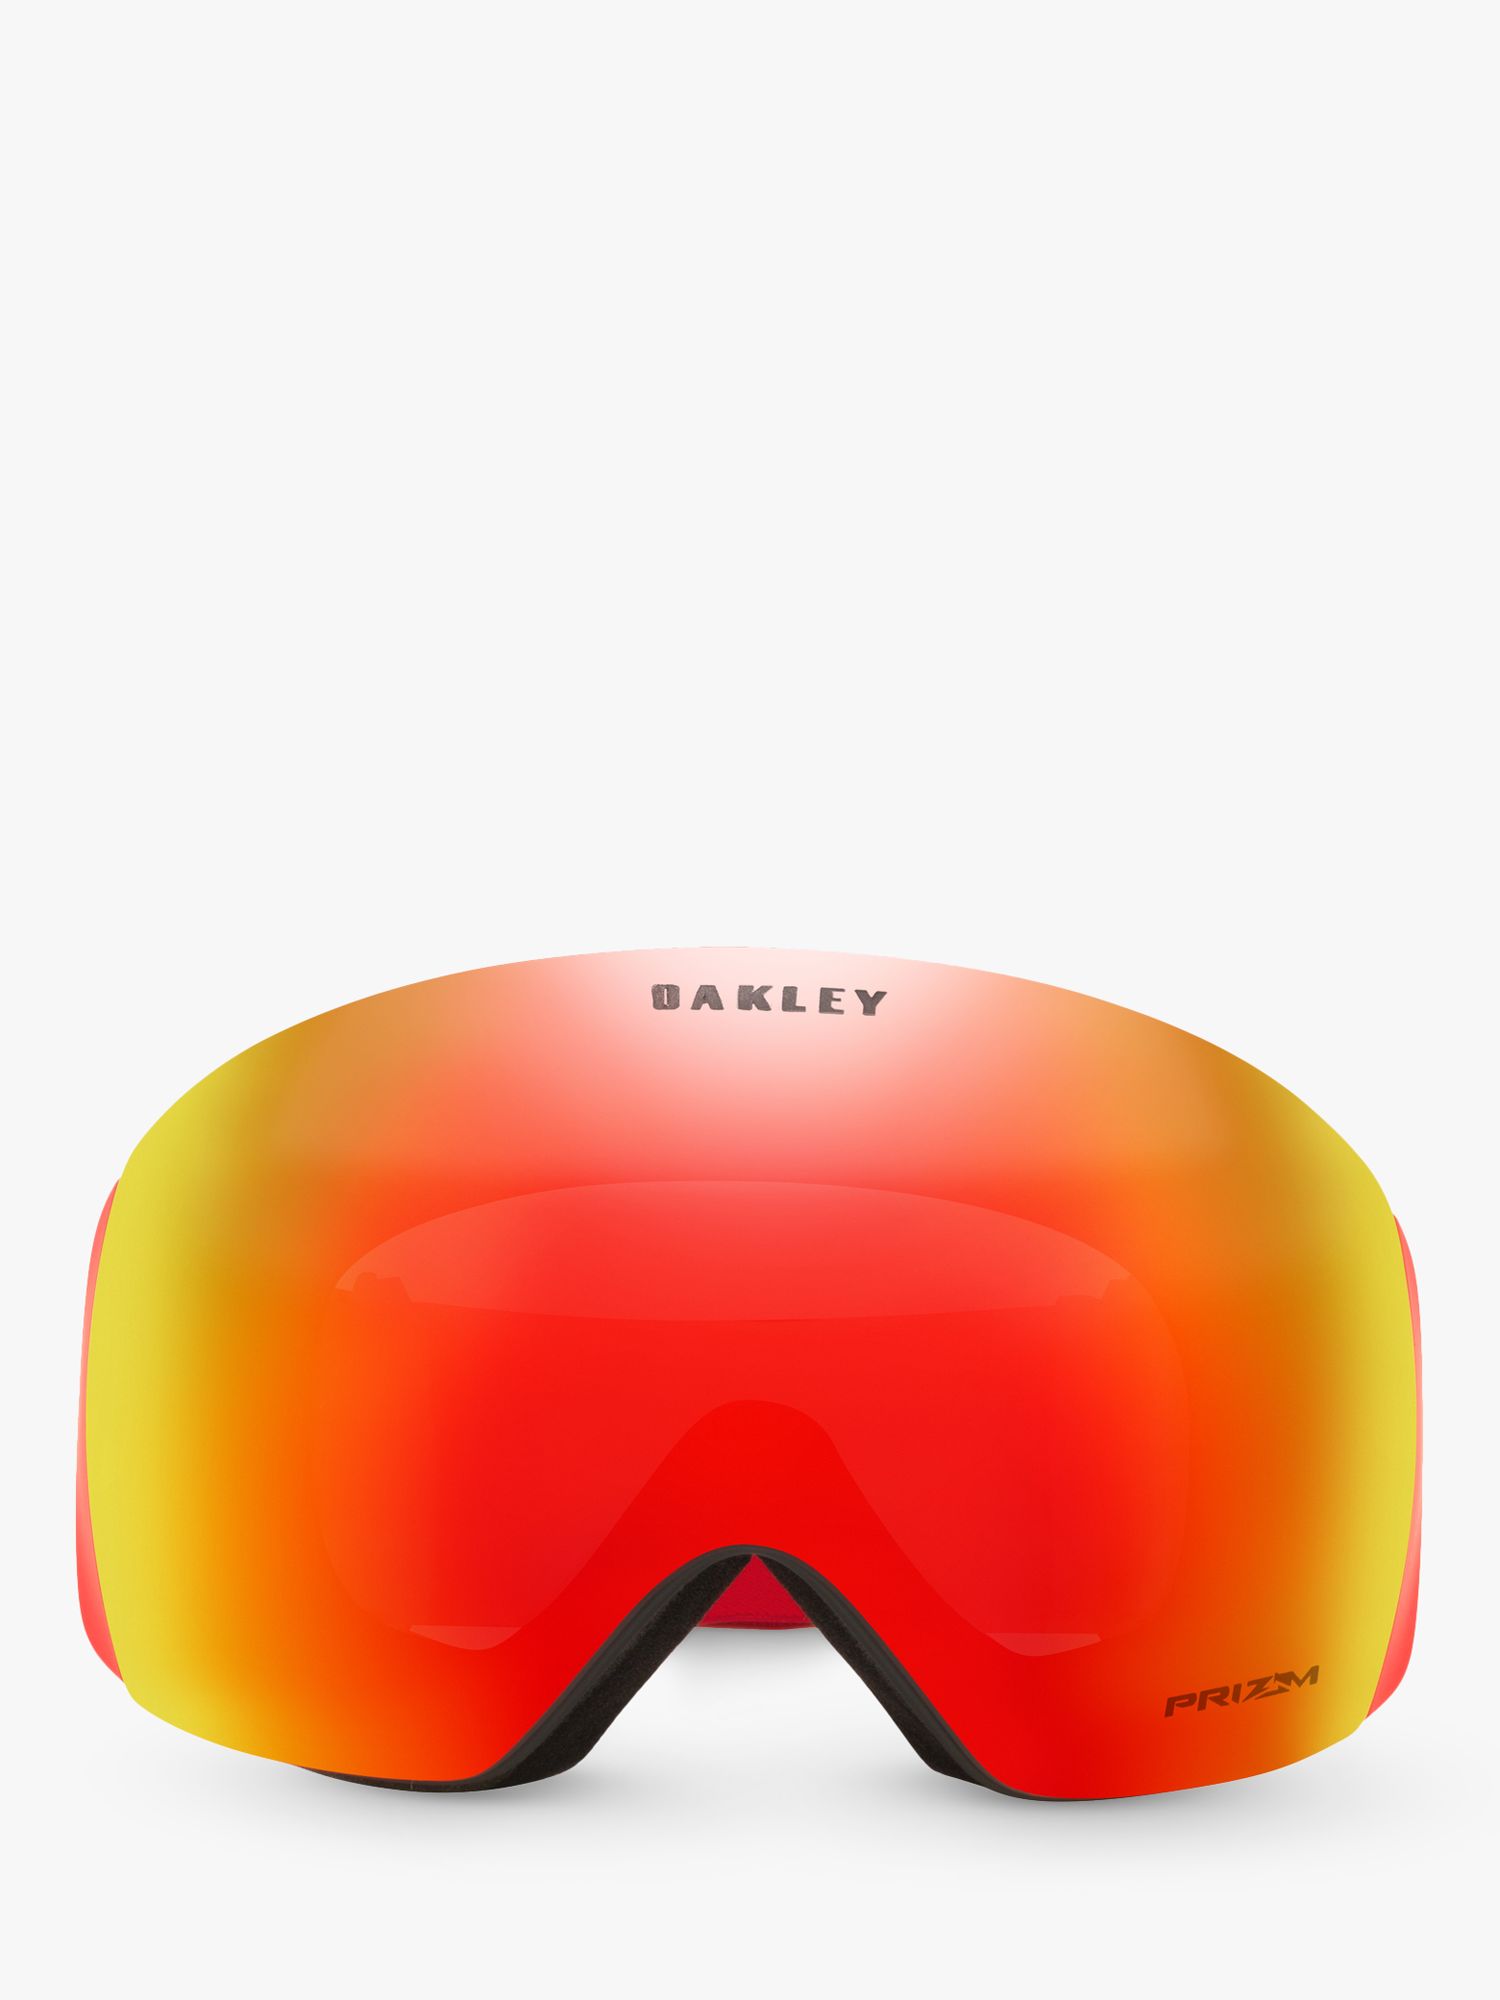 Oakley OO7050 Unisex Flight Deck L Prizm Ski Goggles, Red